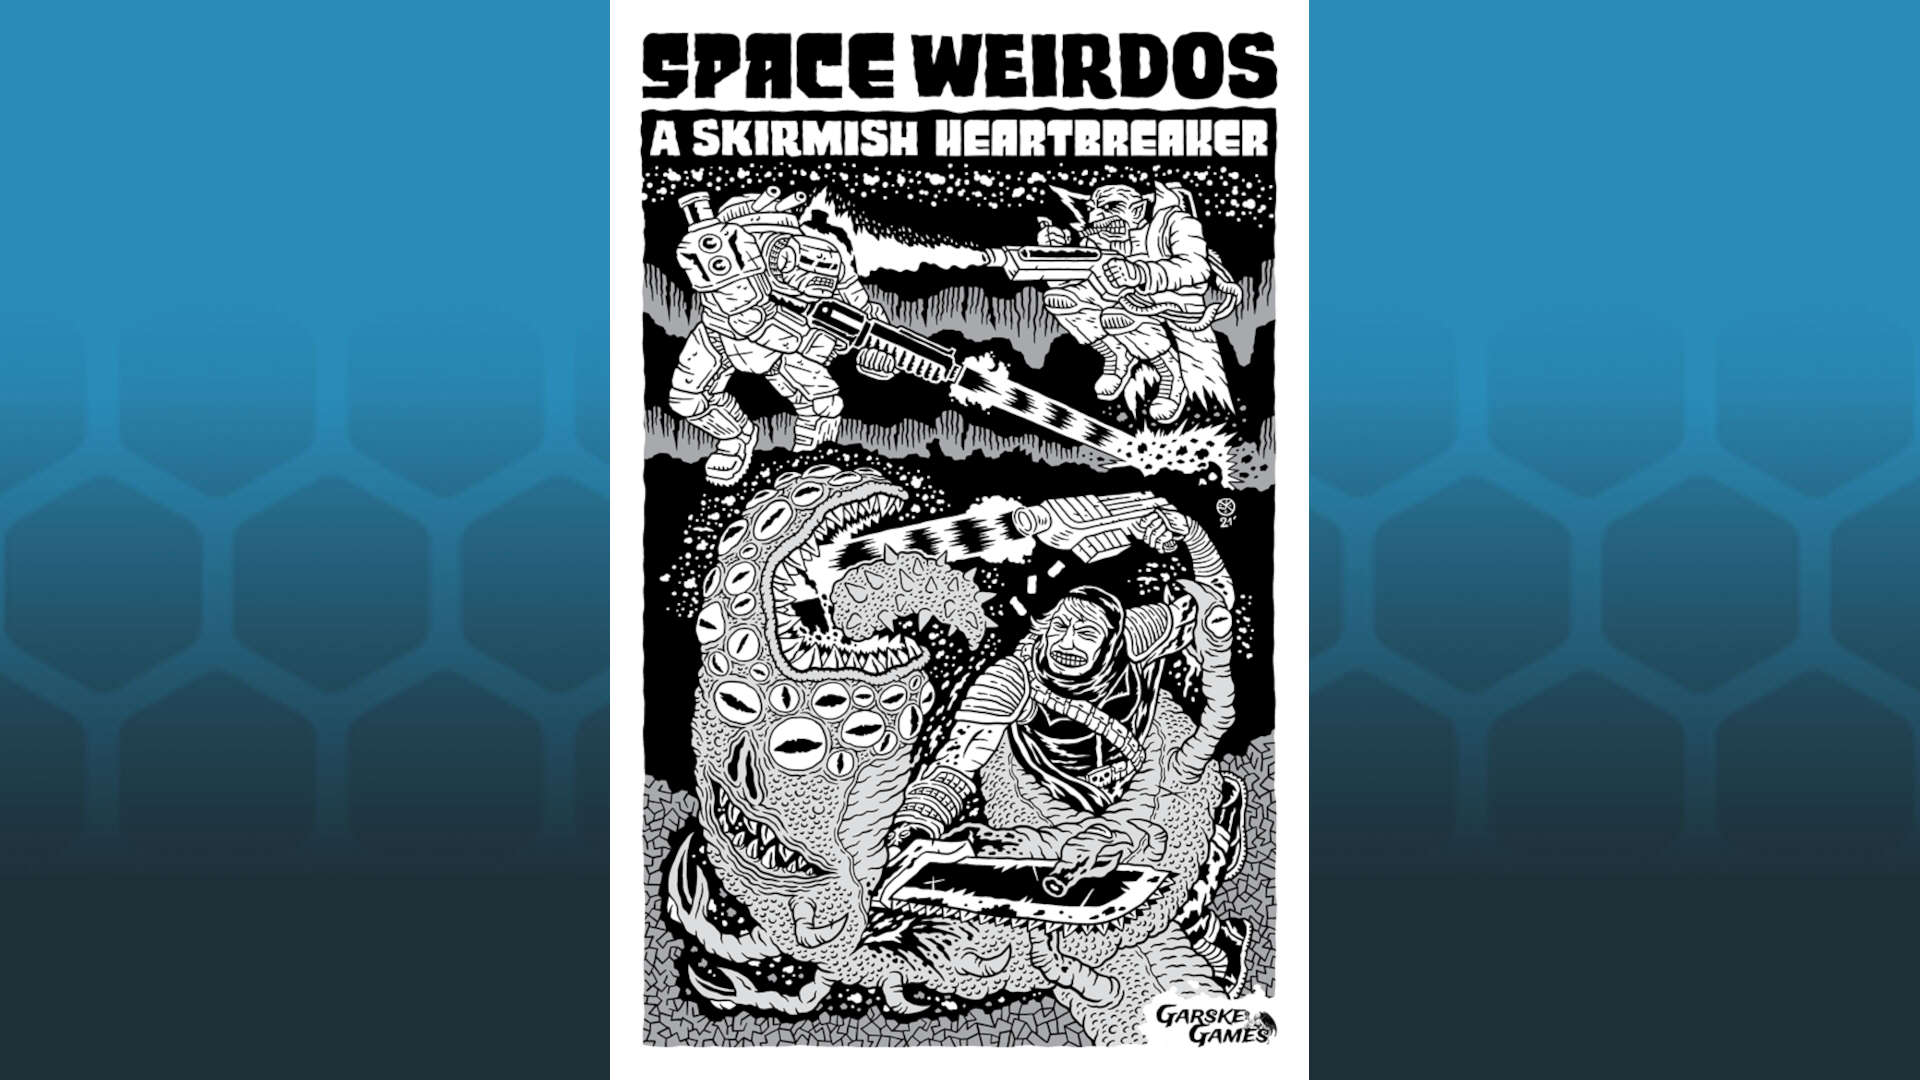 Sword Weirdos is like Warhammer but smaller and weirder - cover art of Space Weirdos by Łukasz Kowalczuk, three sci fi warriors fighting